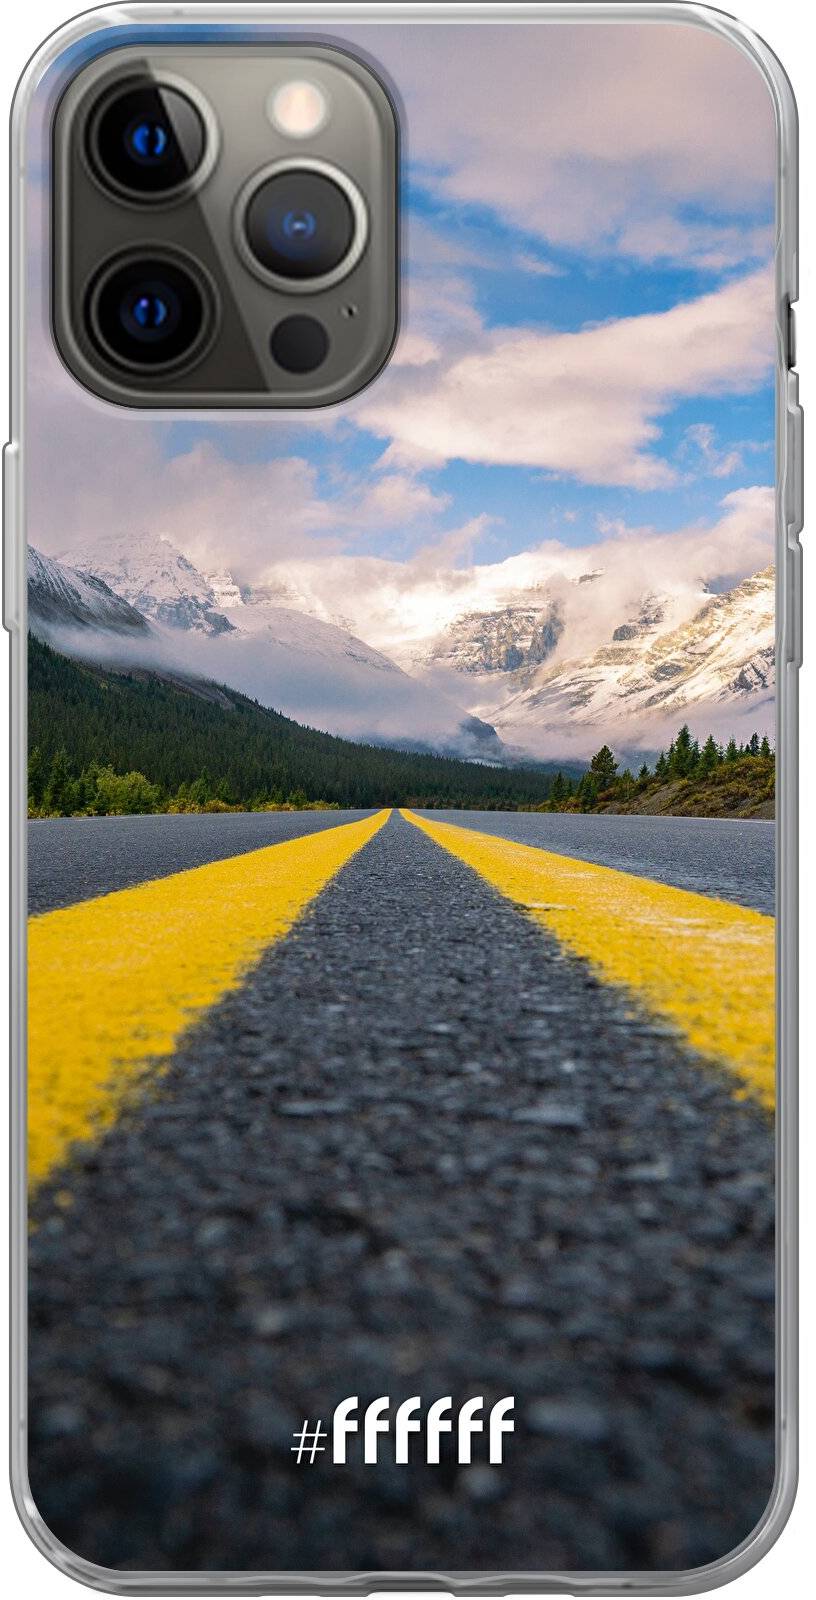 Road Ahead iPhone 12 Pro Max